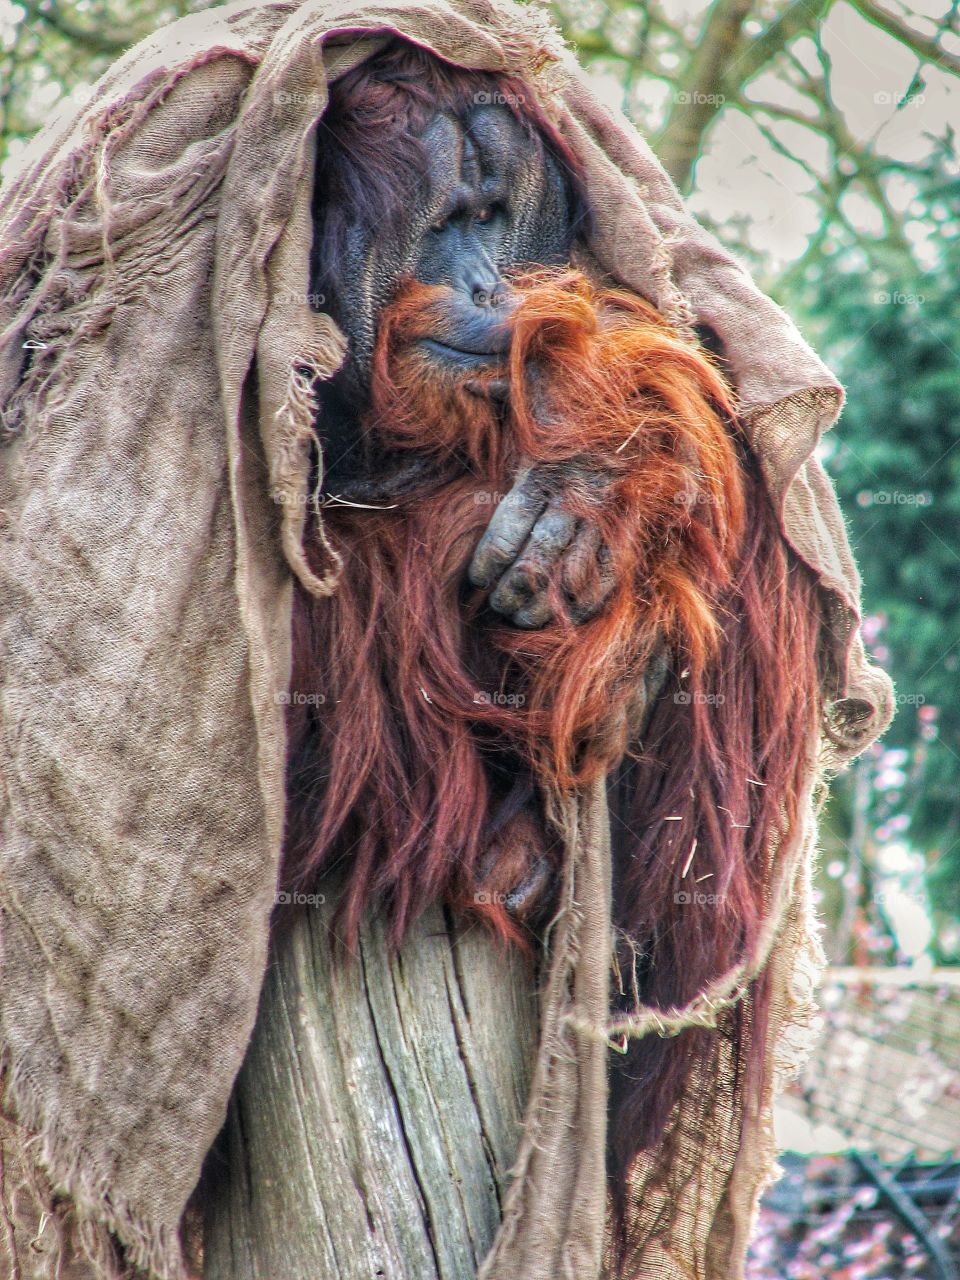 Old Man Orangutan. A widened, old, male Orangutan sitting on a pole it's a blanket draped over his head to keep himself warm.